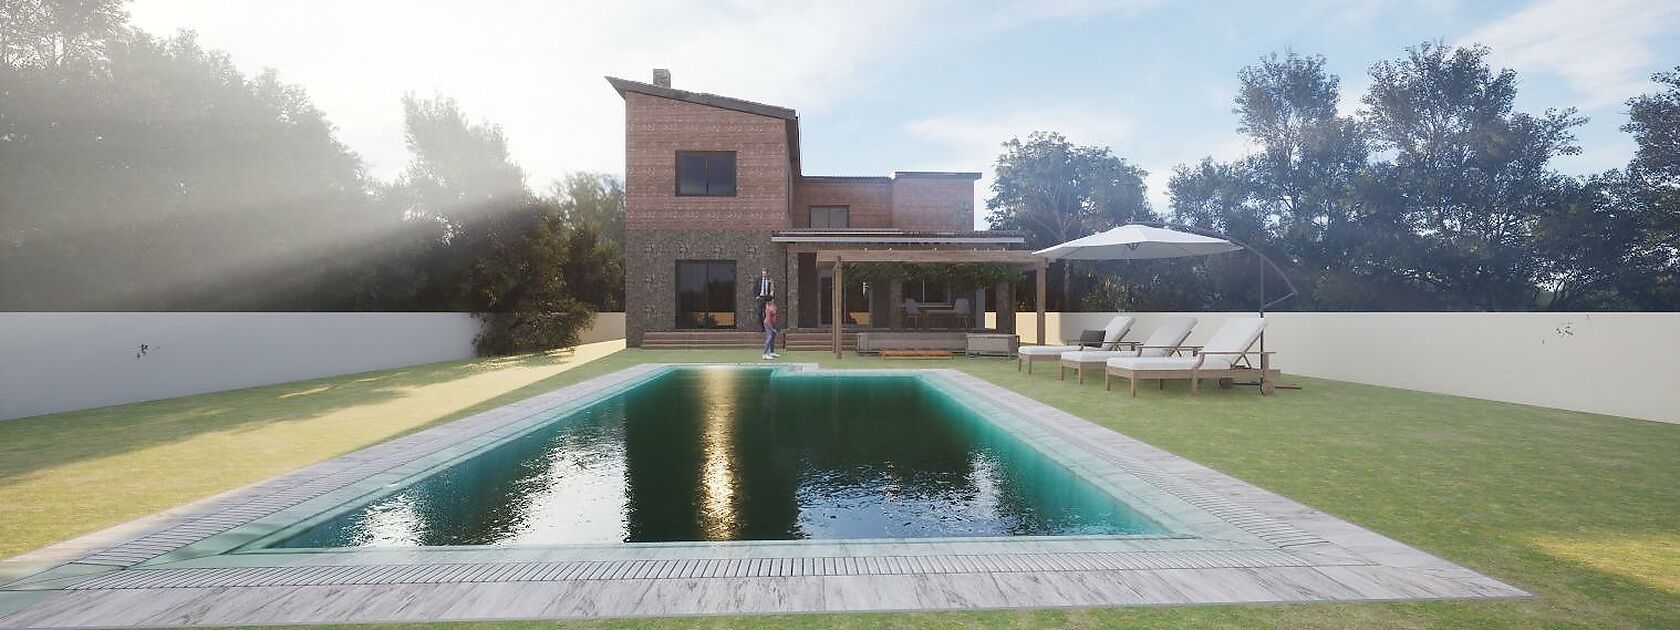 Superb Detached Villa with Pool